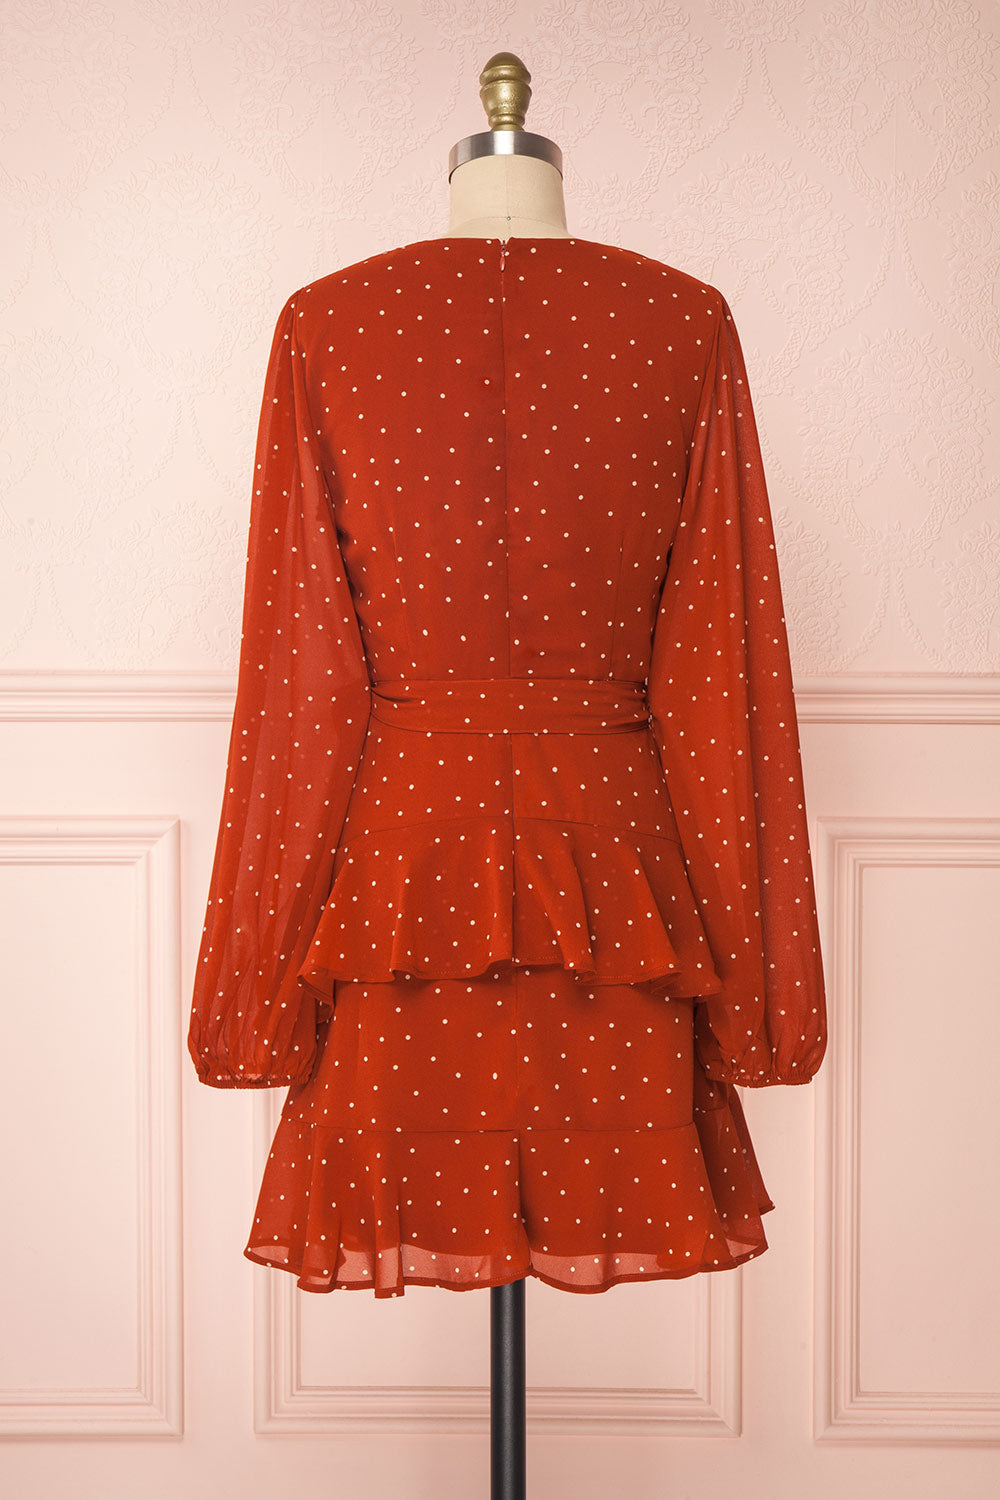 Mayifa Rust Orange Polka Dot A-Line Short Dress back view | Boutique 1861